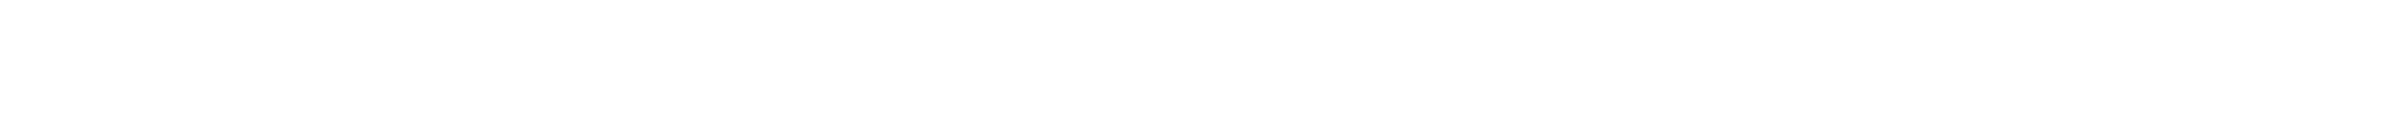 Geoffrey Beene logo